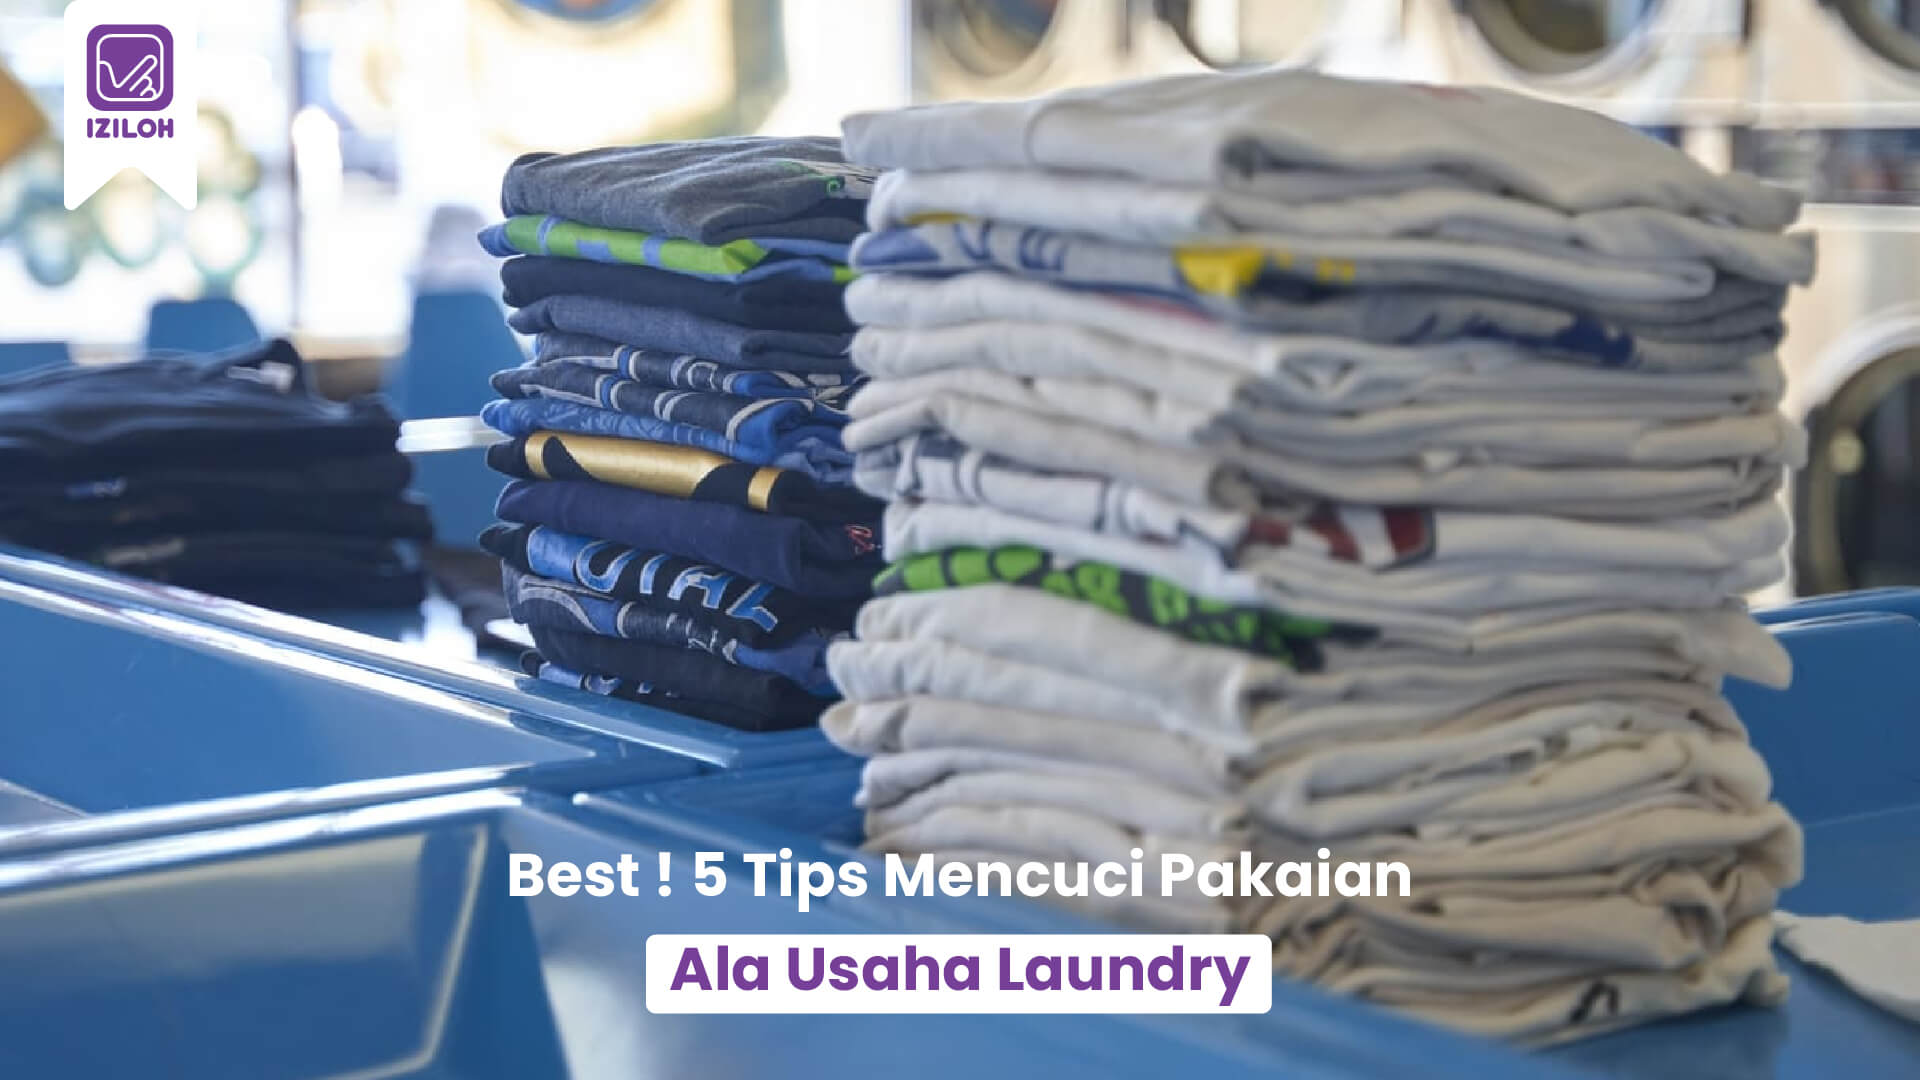 Best ! 5 Tips Mencuci Pakaian Ala Usaha Laundry